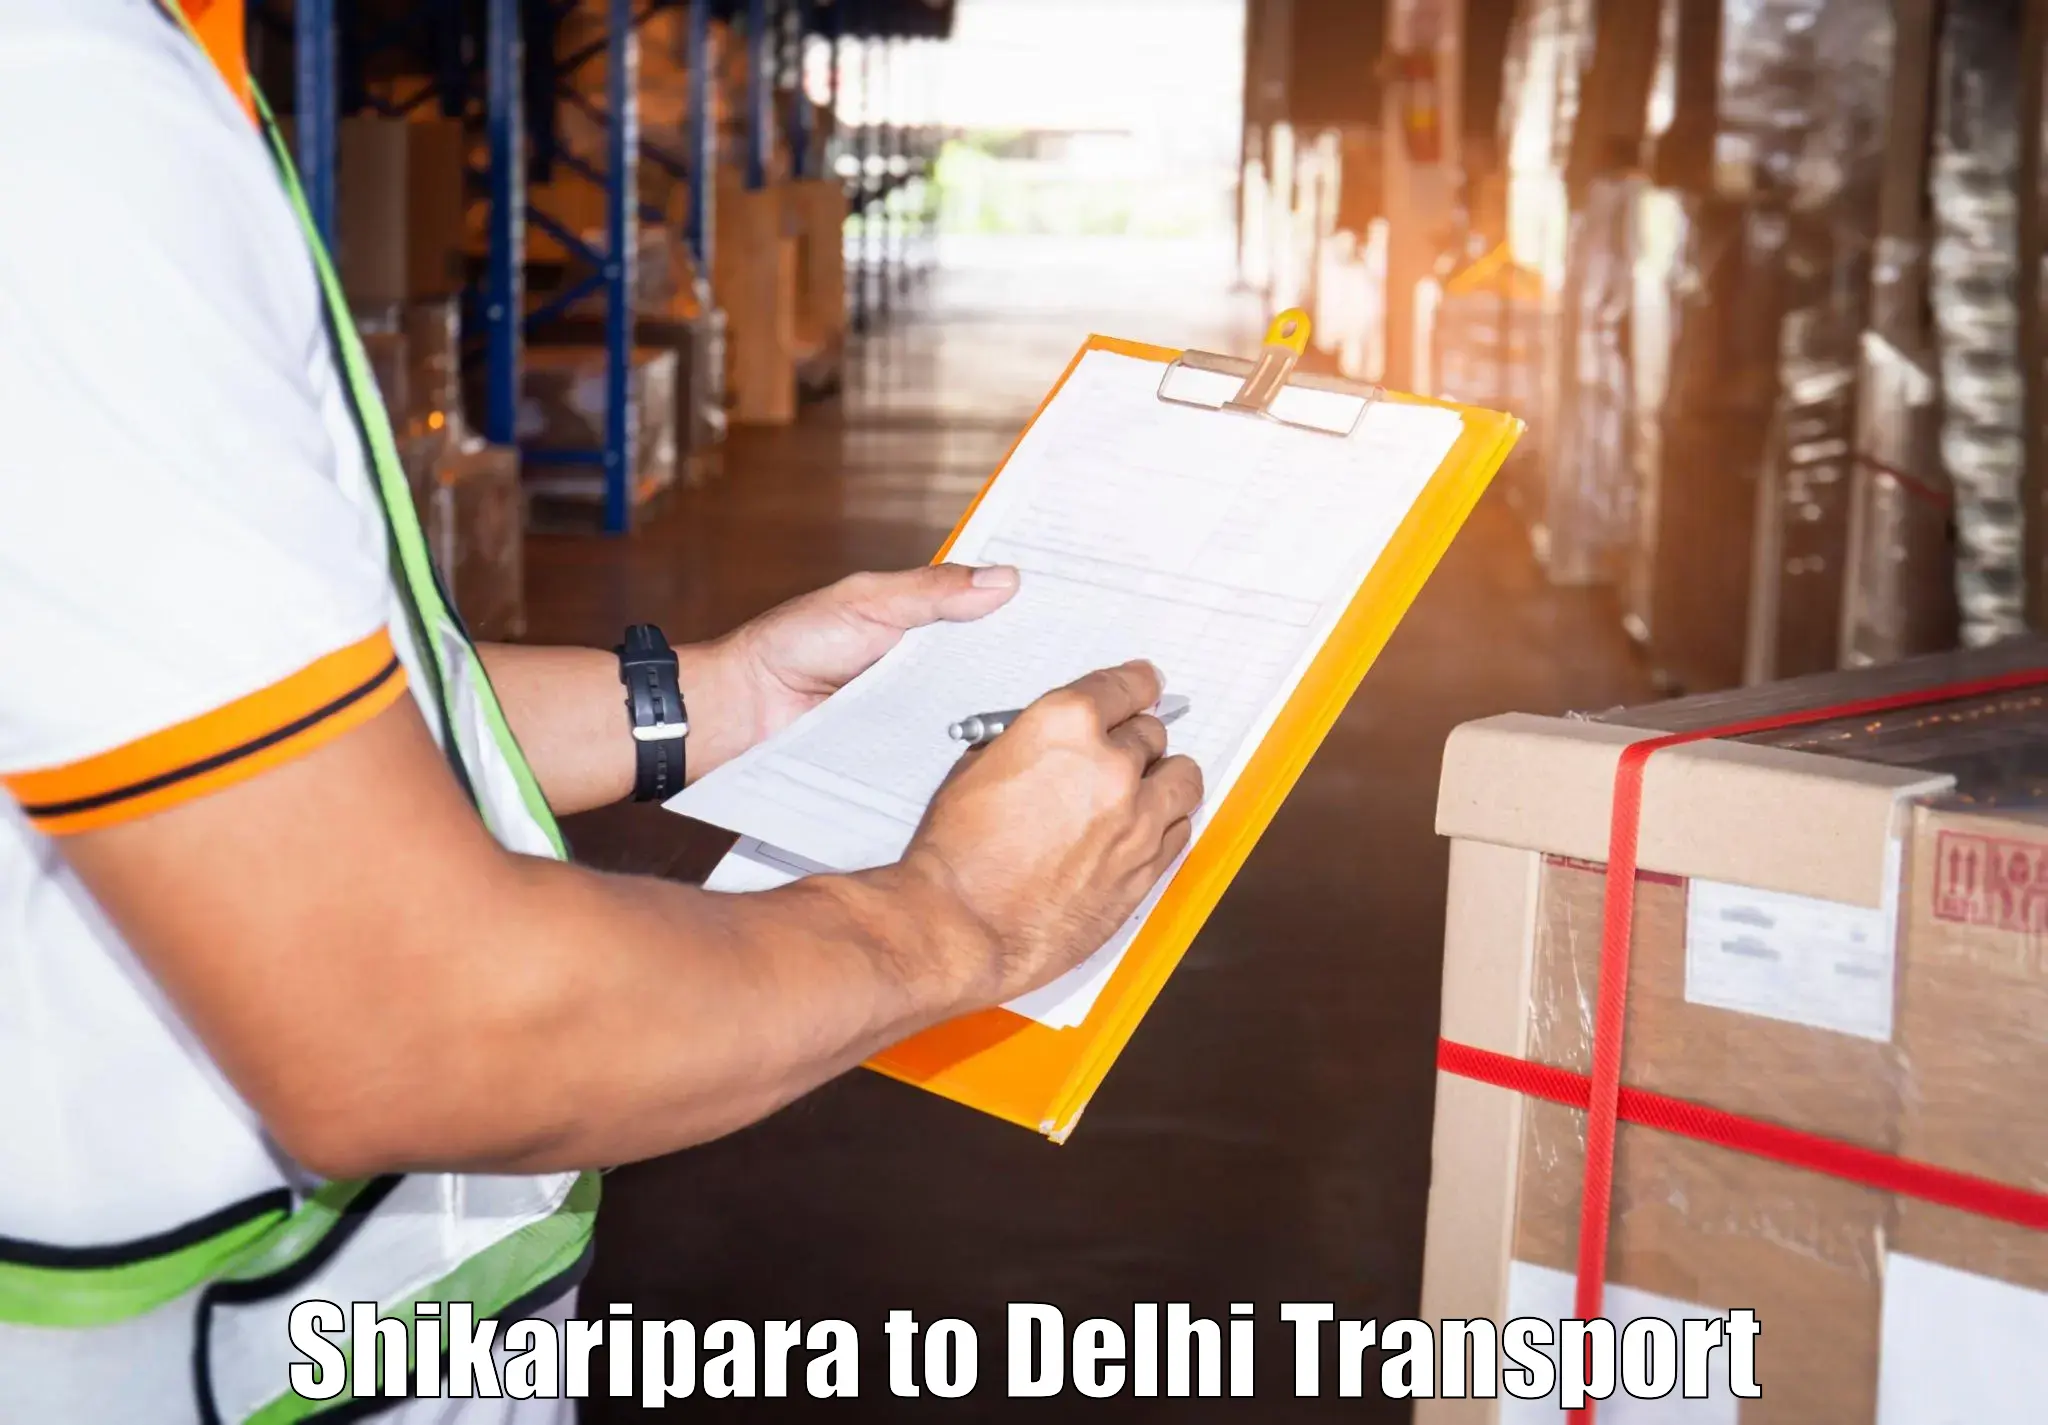 Bike shipping service Shikaripara to Delhi